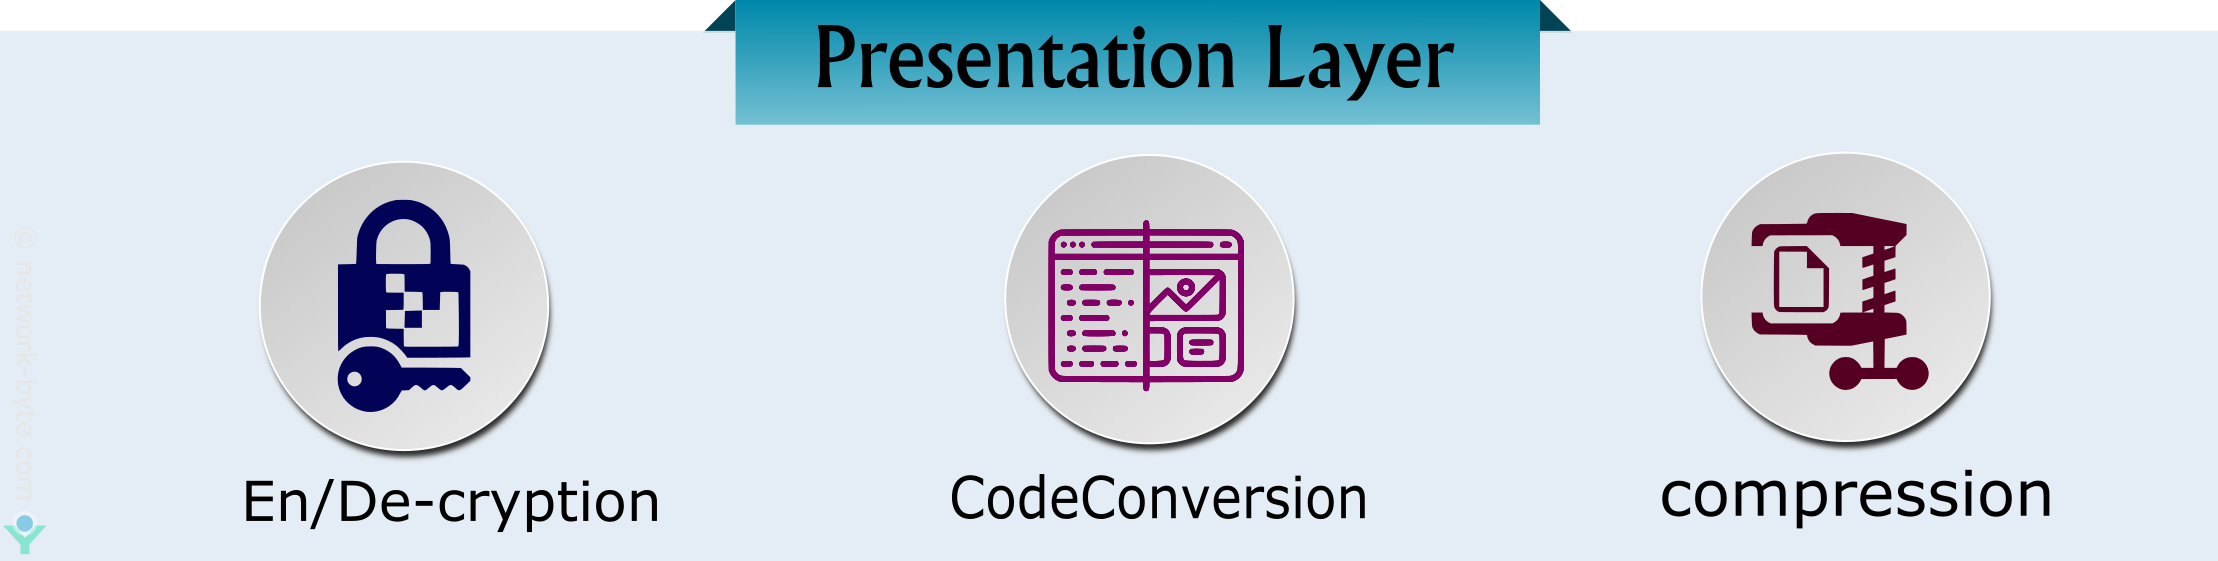 presentation layer osi layer